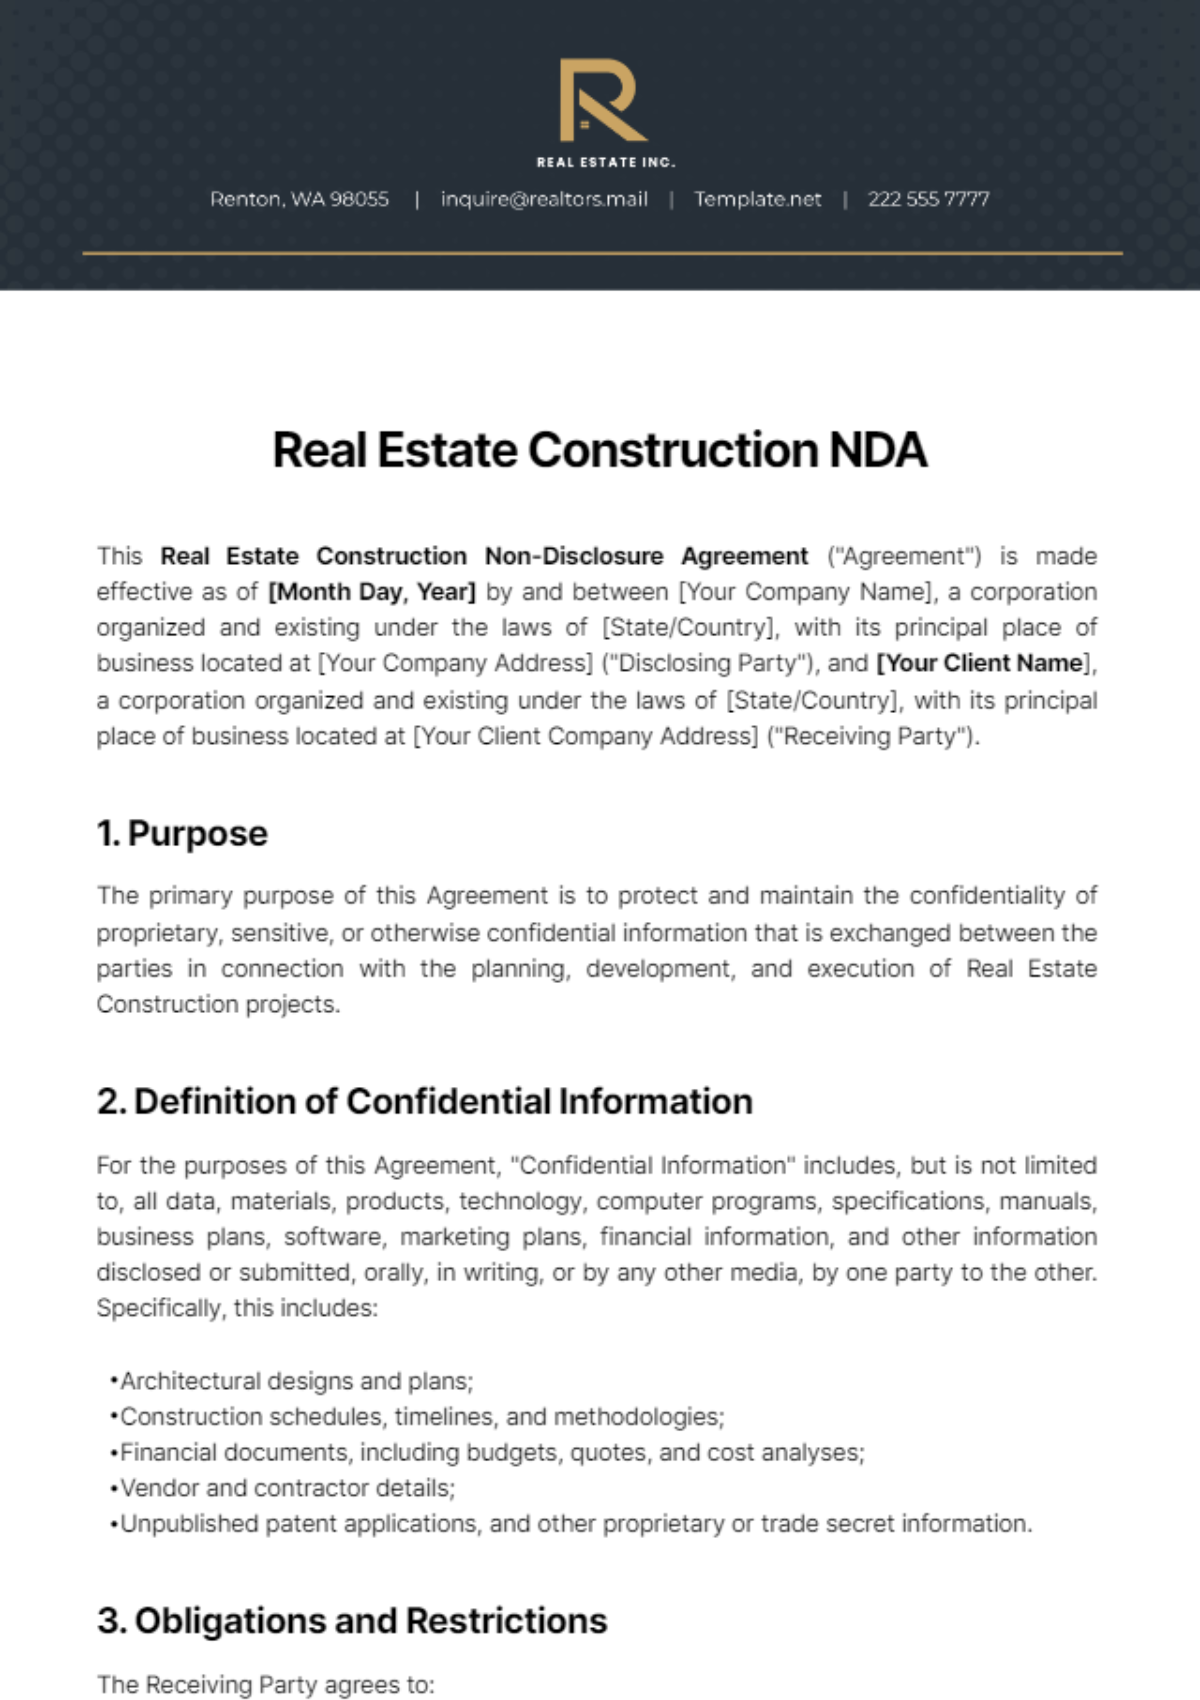 Real Estate Construction NDA Template